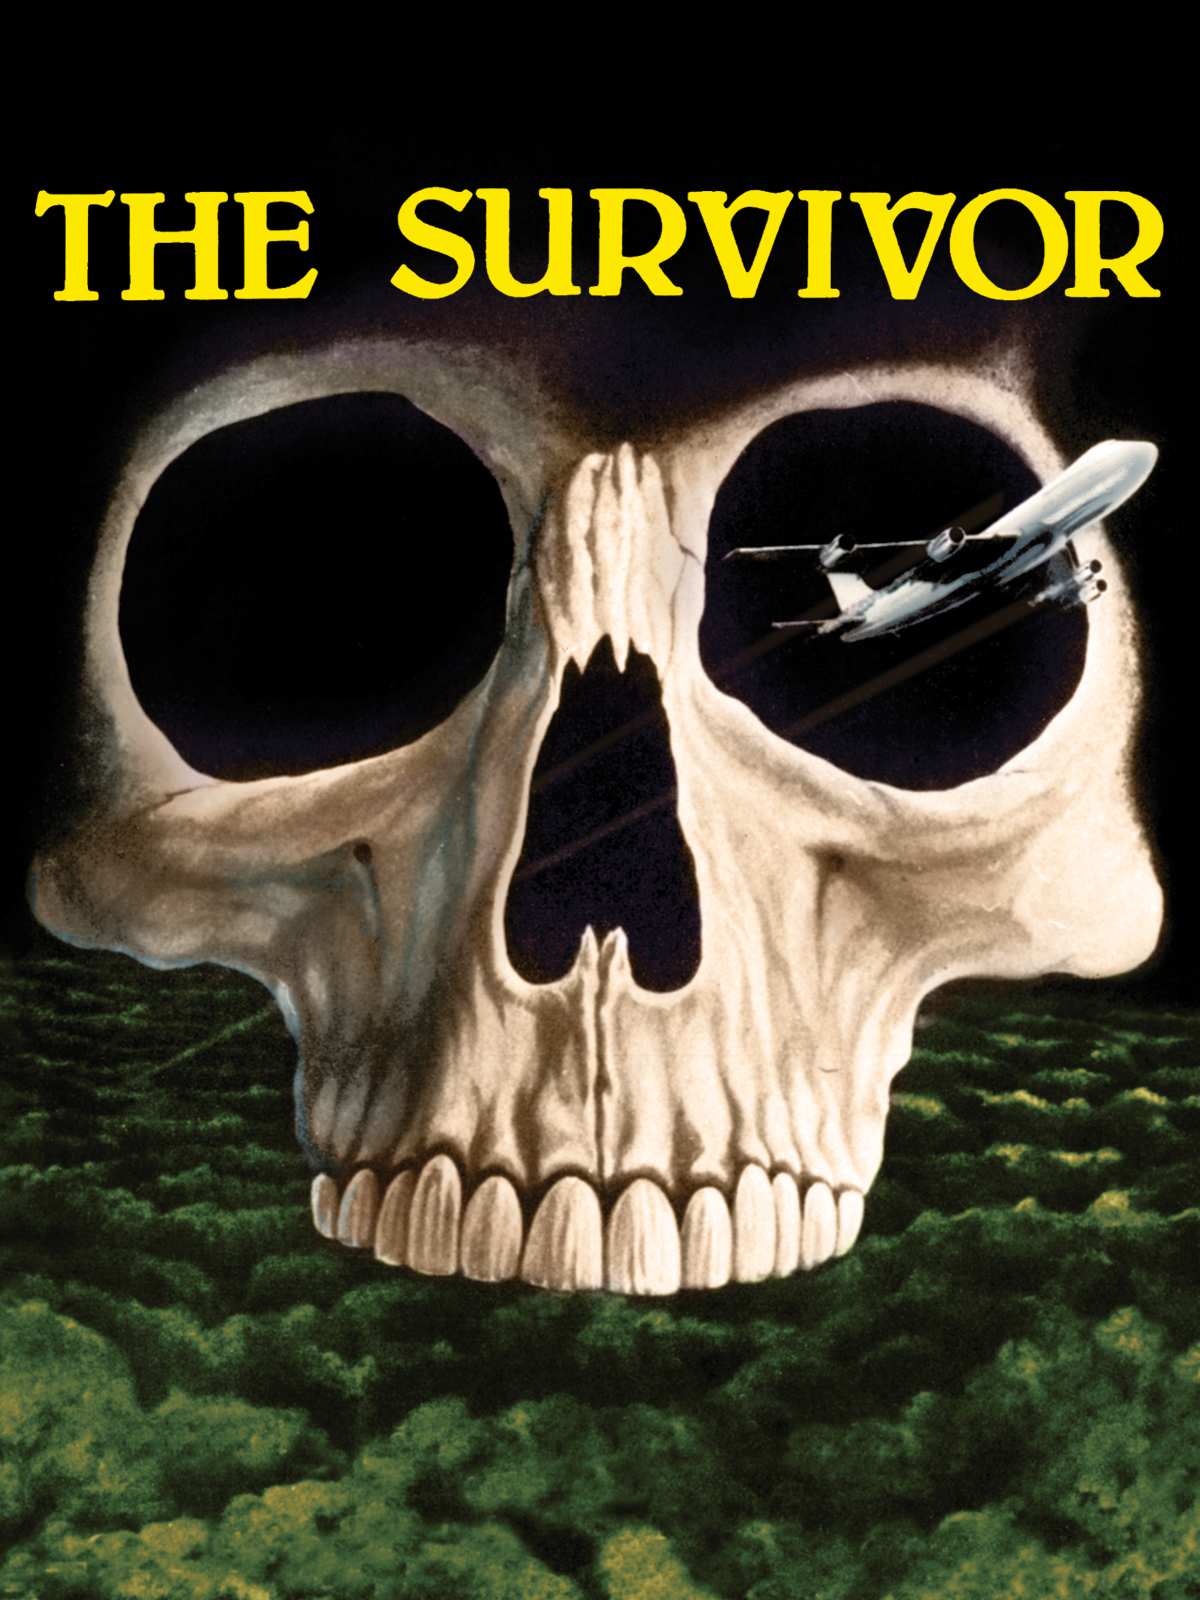 The Survivor (1981) starring Robert Powell on DVD on DVD